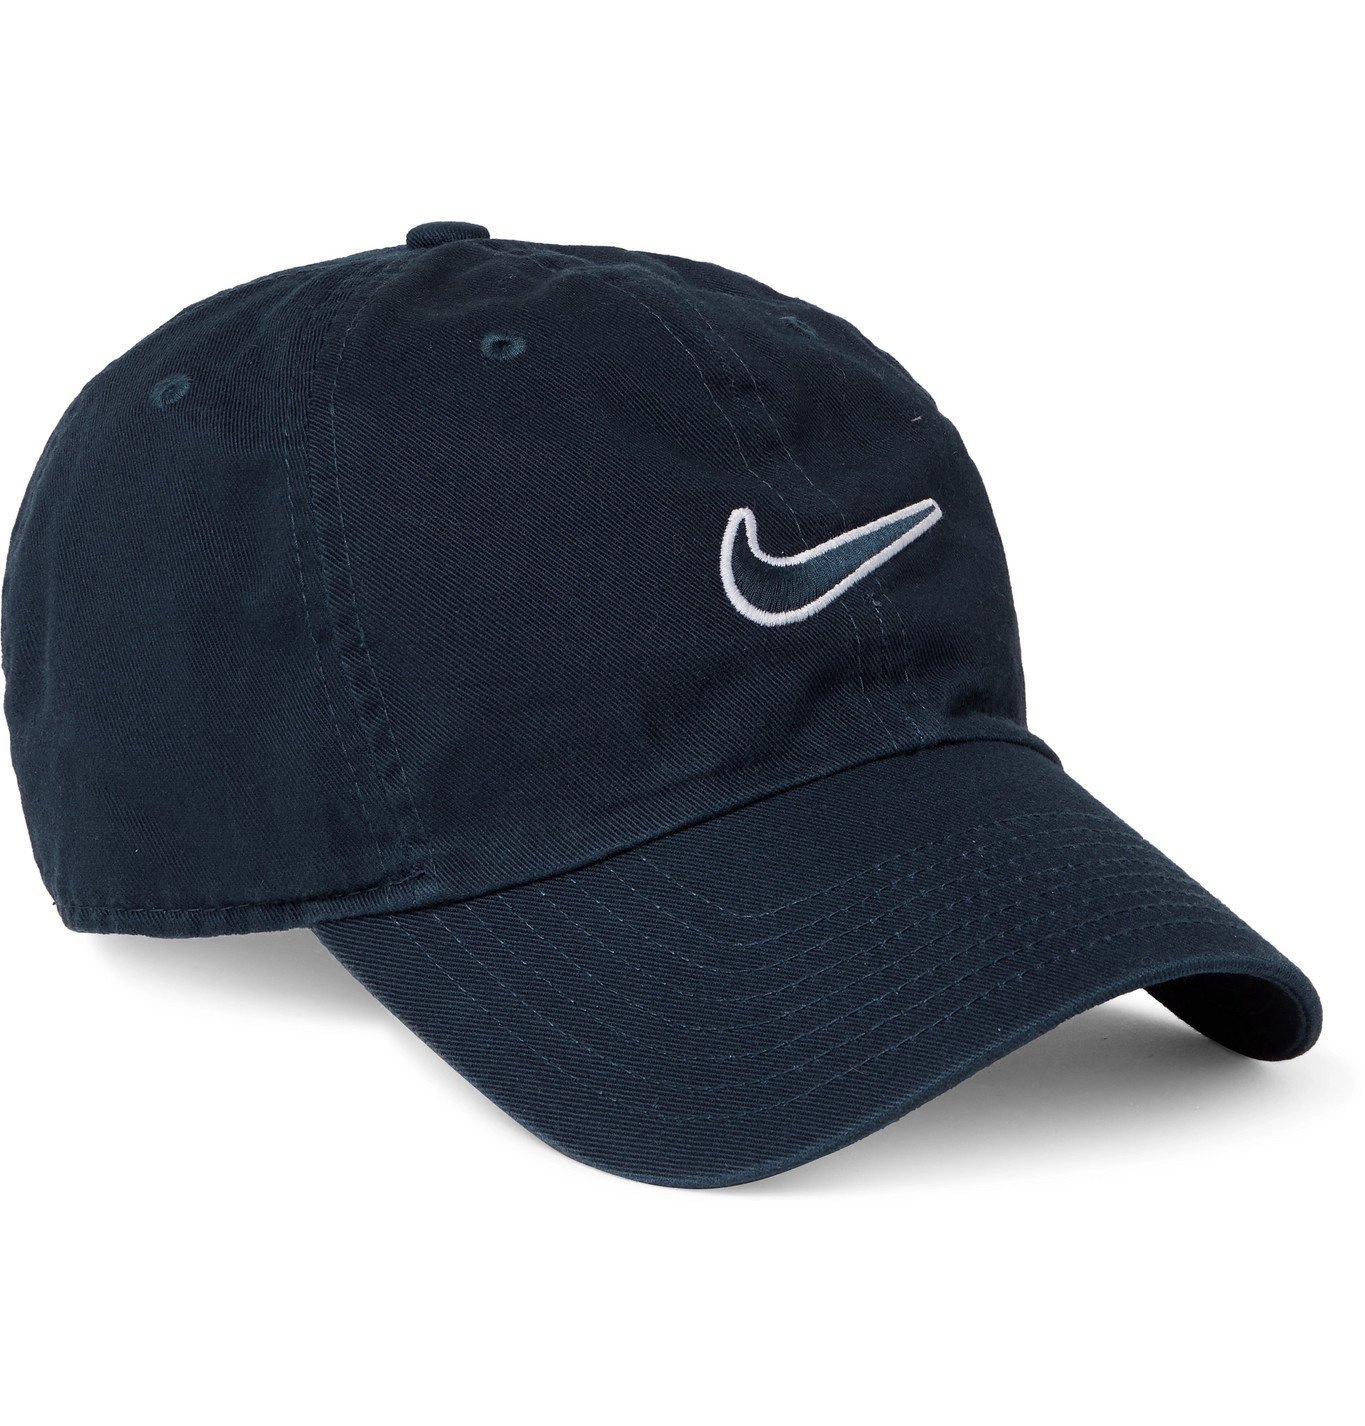 blue nike baseball cap